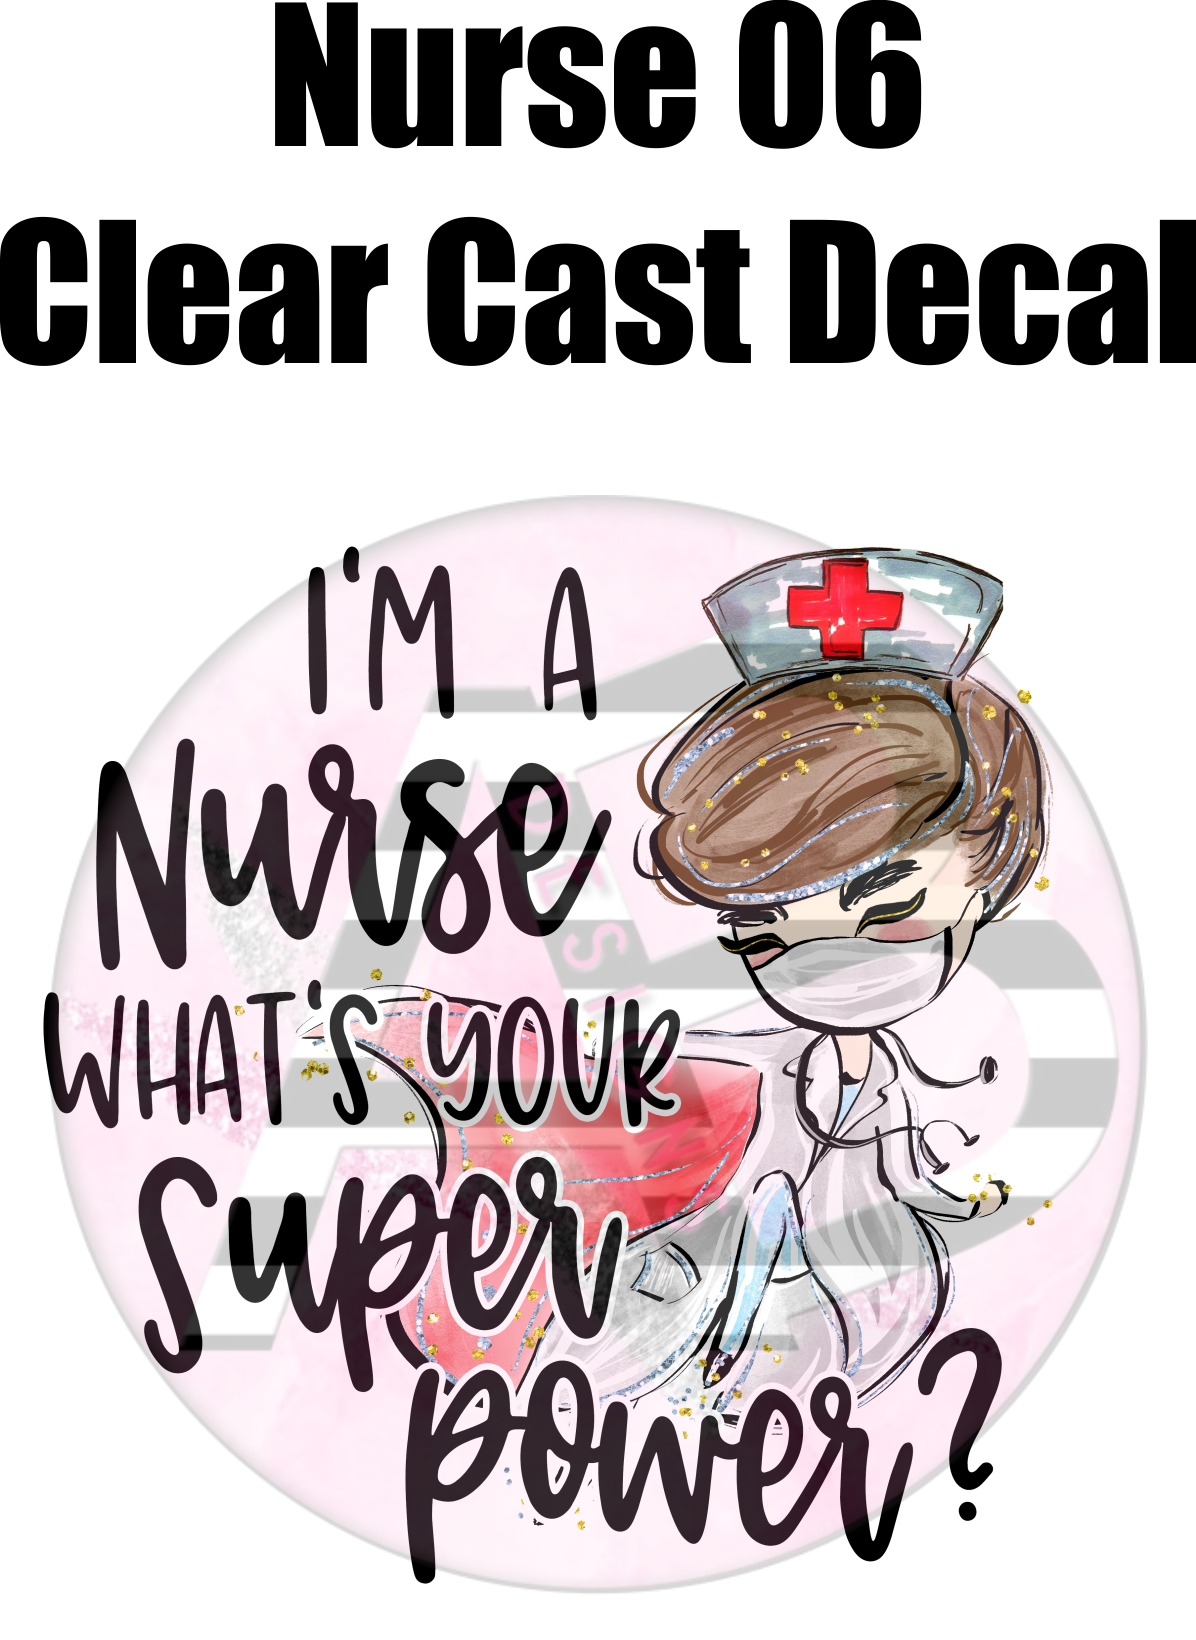 Nurse 06 - Clear Cast Decal